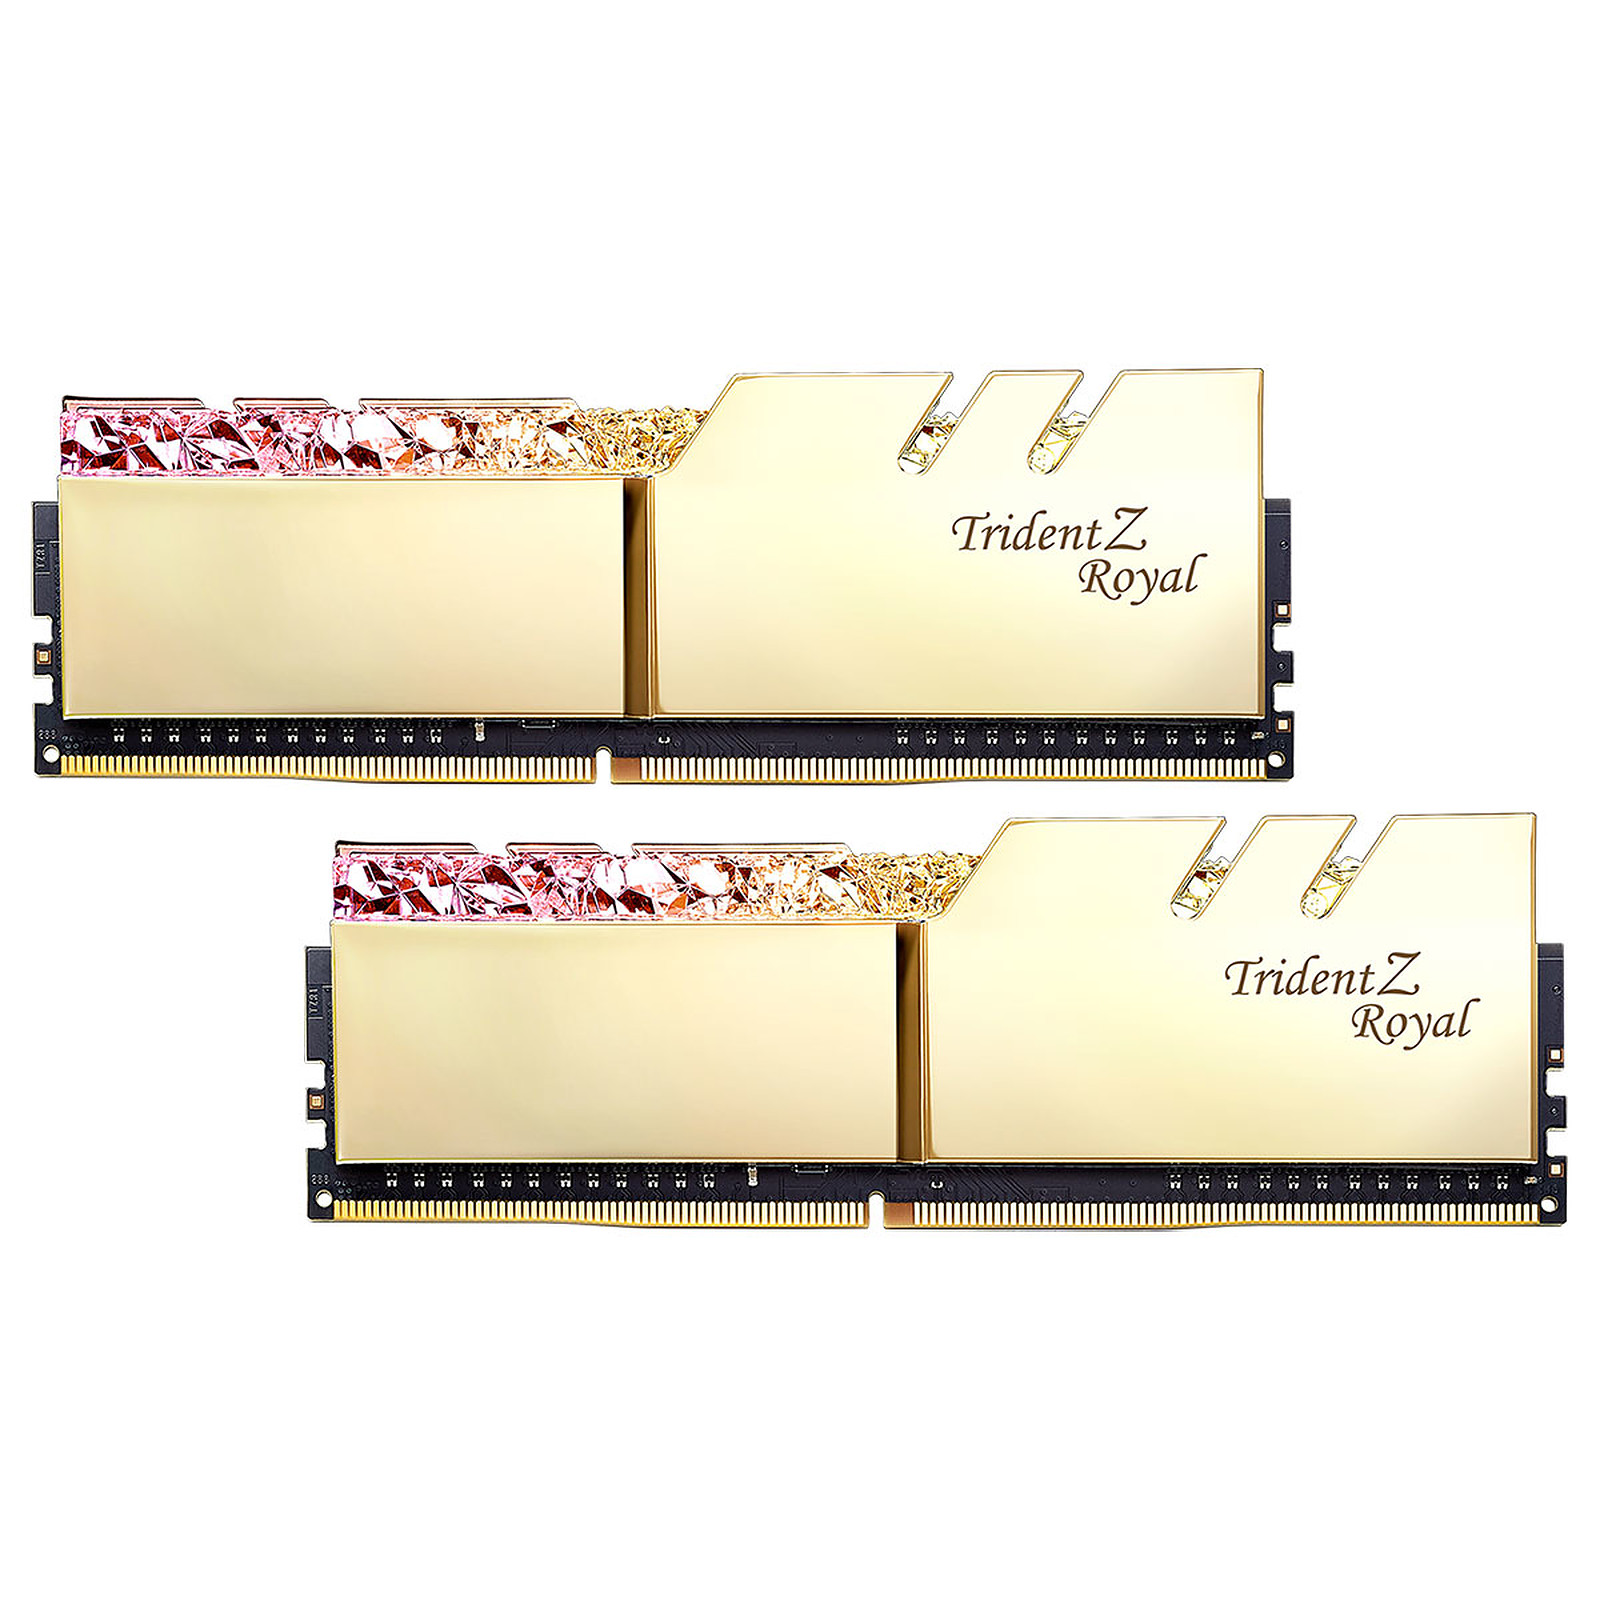 G.Skill Trident Z Royal 16 Go (2x 8 Go) DDR4 3600 MHz CL17 - Or - Memoire PC G.Skill